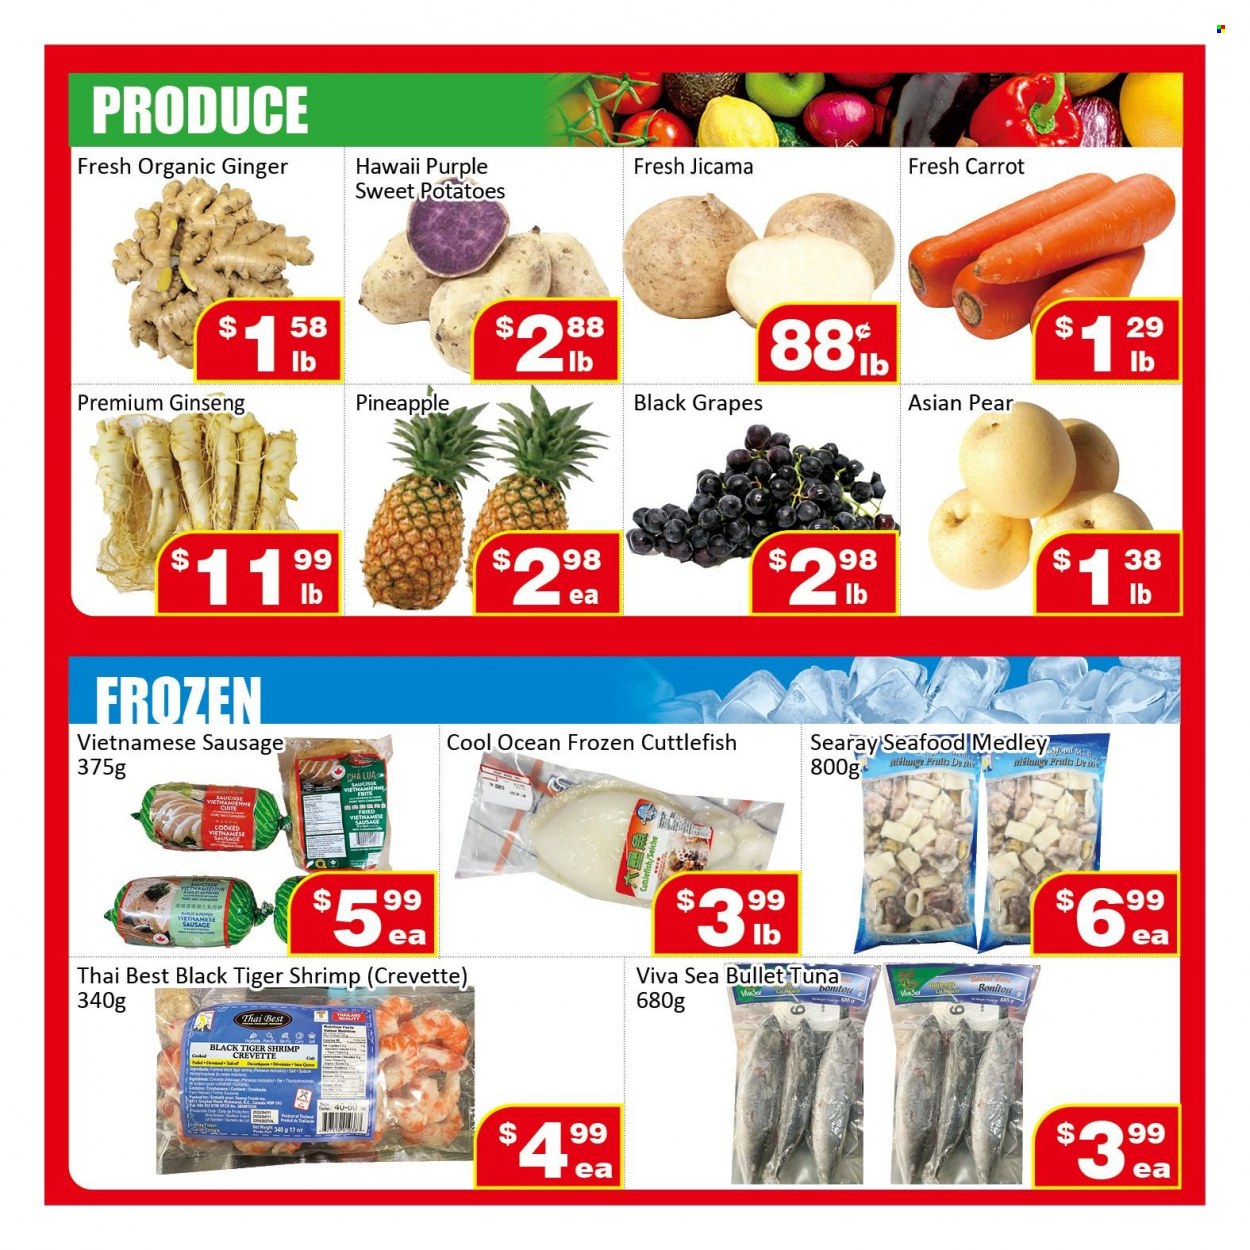 Jian Hing Supermarket Flyer - November 25, 2022 - December 01, 2022 - Sales products - ginger, sweet potato, potatoes, grapes, pineapple, pears, cuttlefish, tuna, seafood, shrimps, sausage, jicama. Page 3.